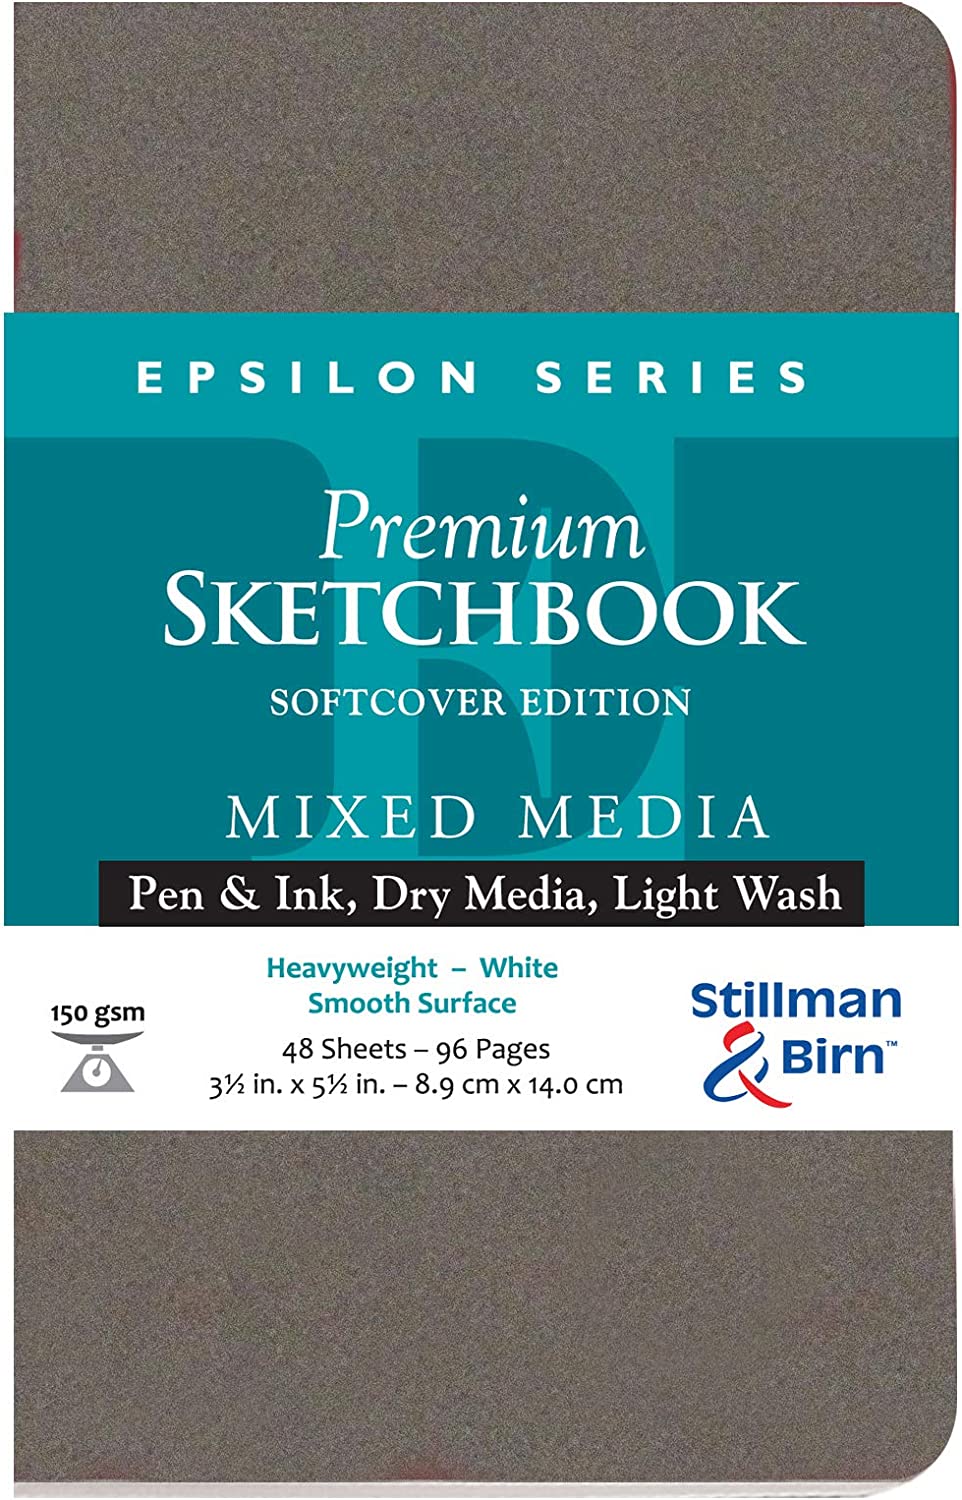 EPSILON SERIES // PREMIUM SKETCHBOOK